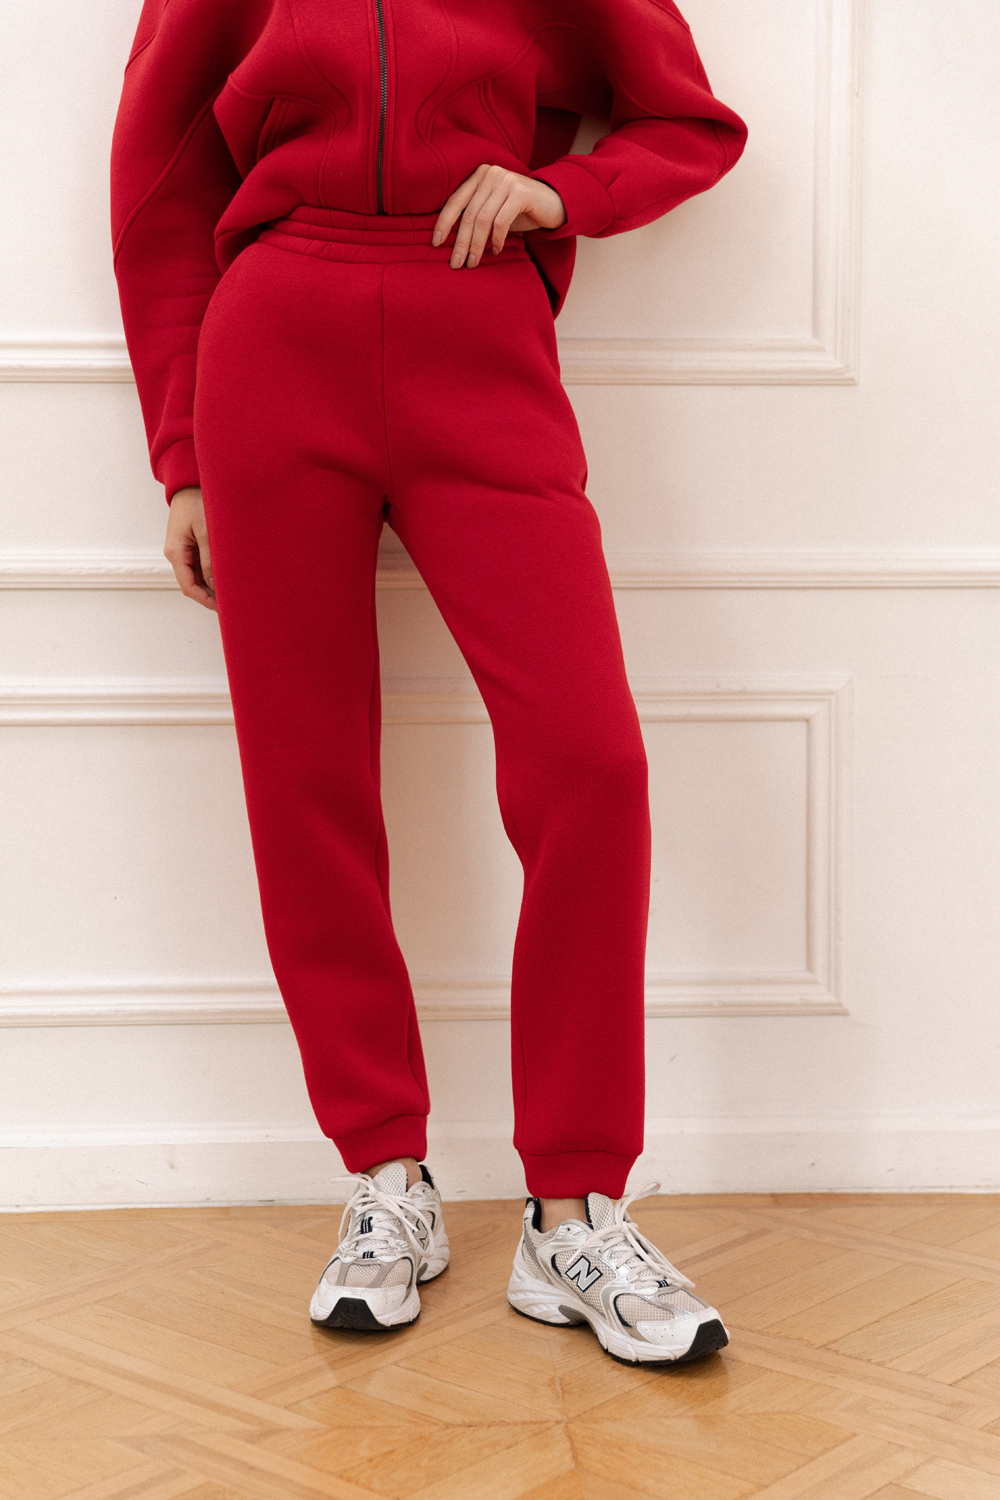 Red fleece pants